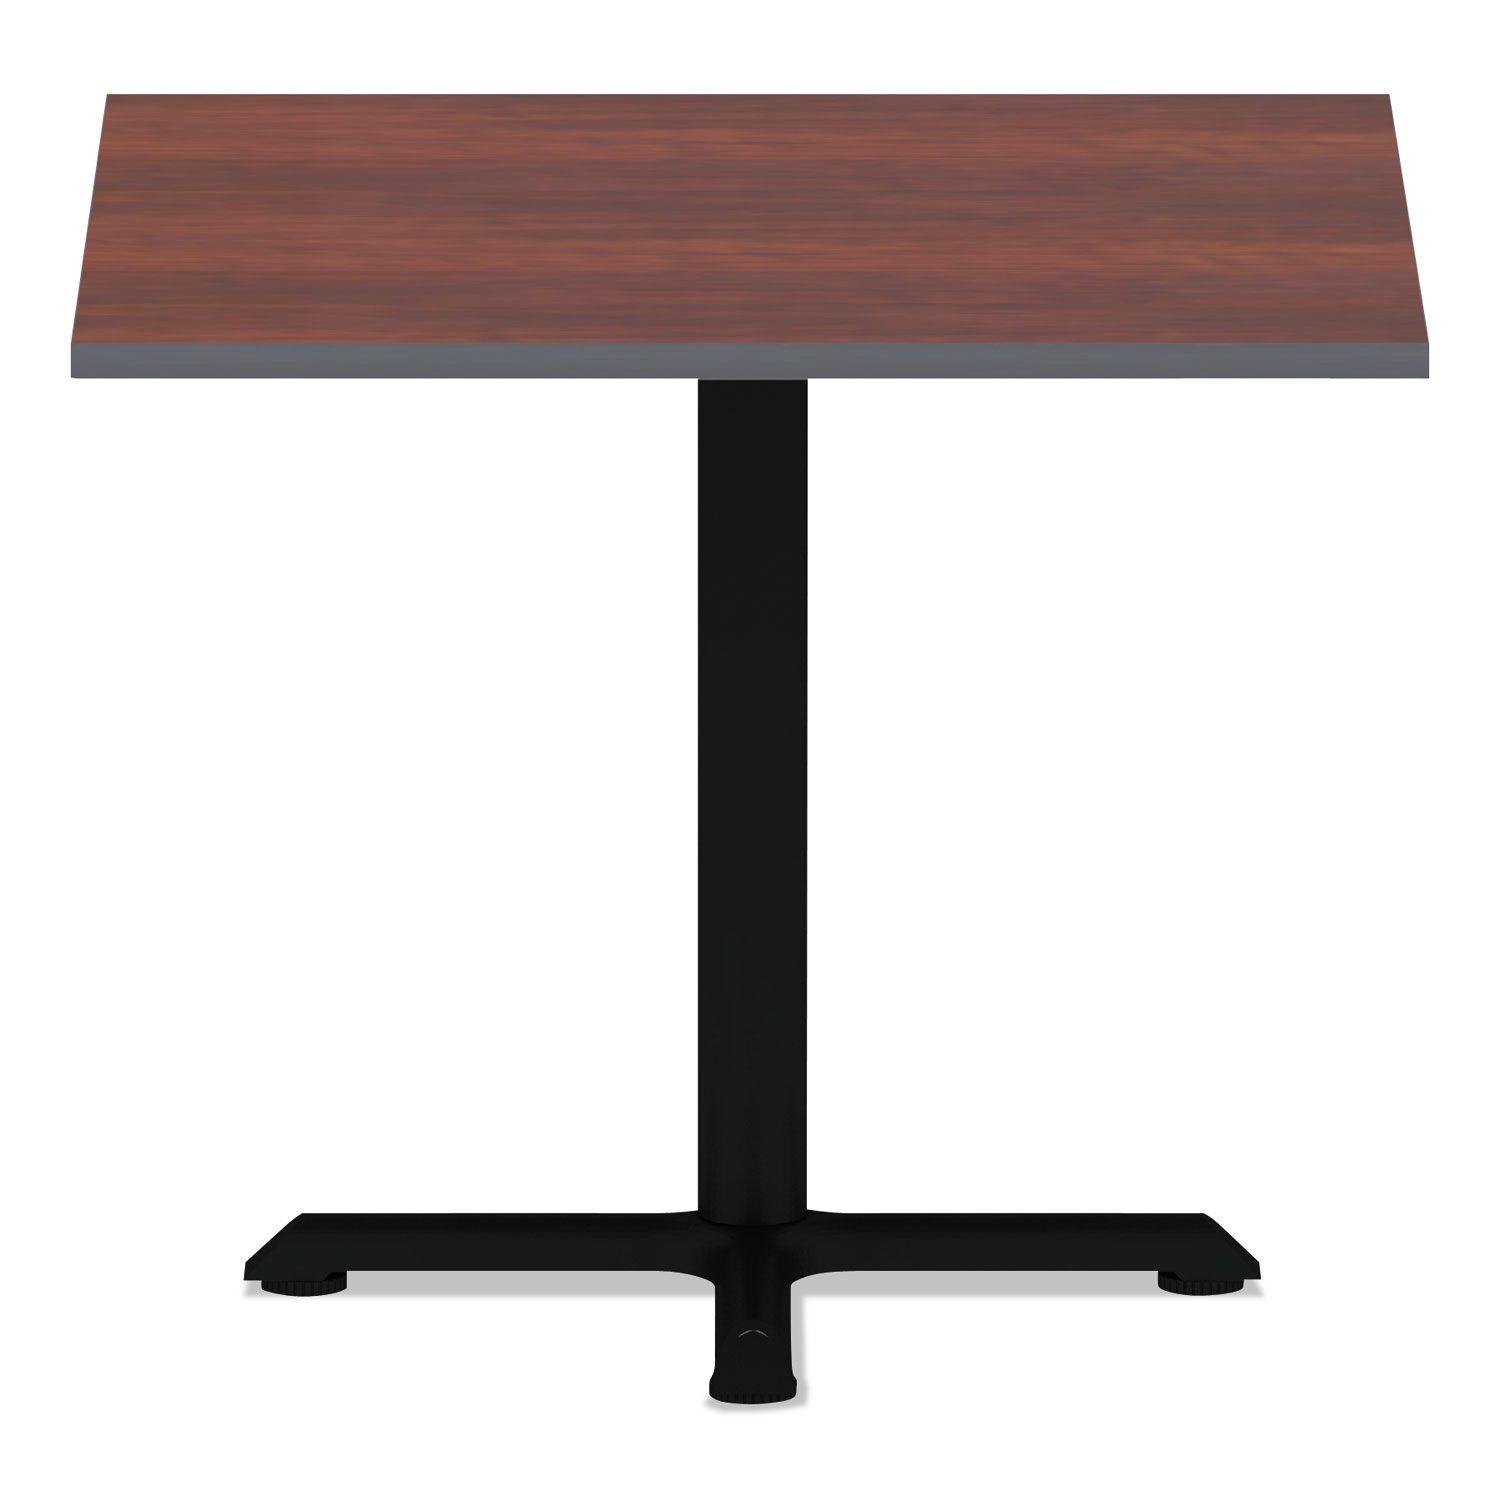  Alera ALETTSQ36CM Reversible Laminate Table Top, Square, 35 3/8w x 35 3/8d, Medium Cherry/Mahogany (ALETTSQ36CM) 